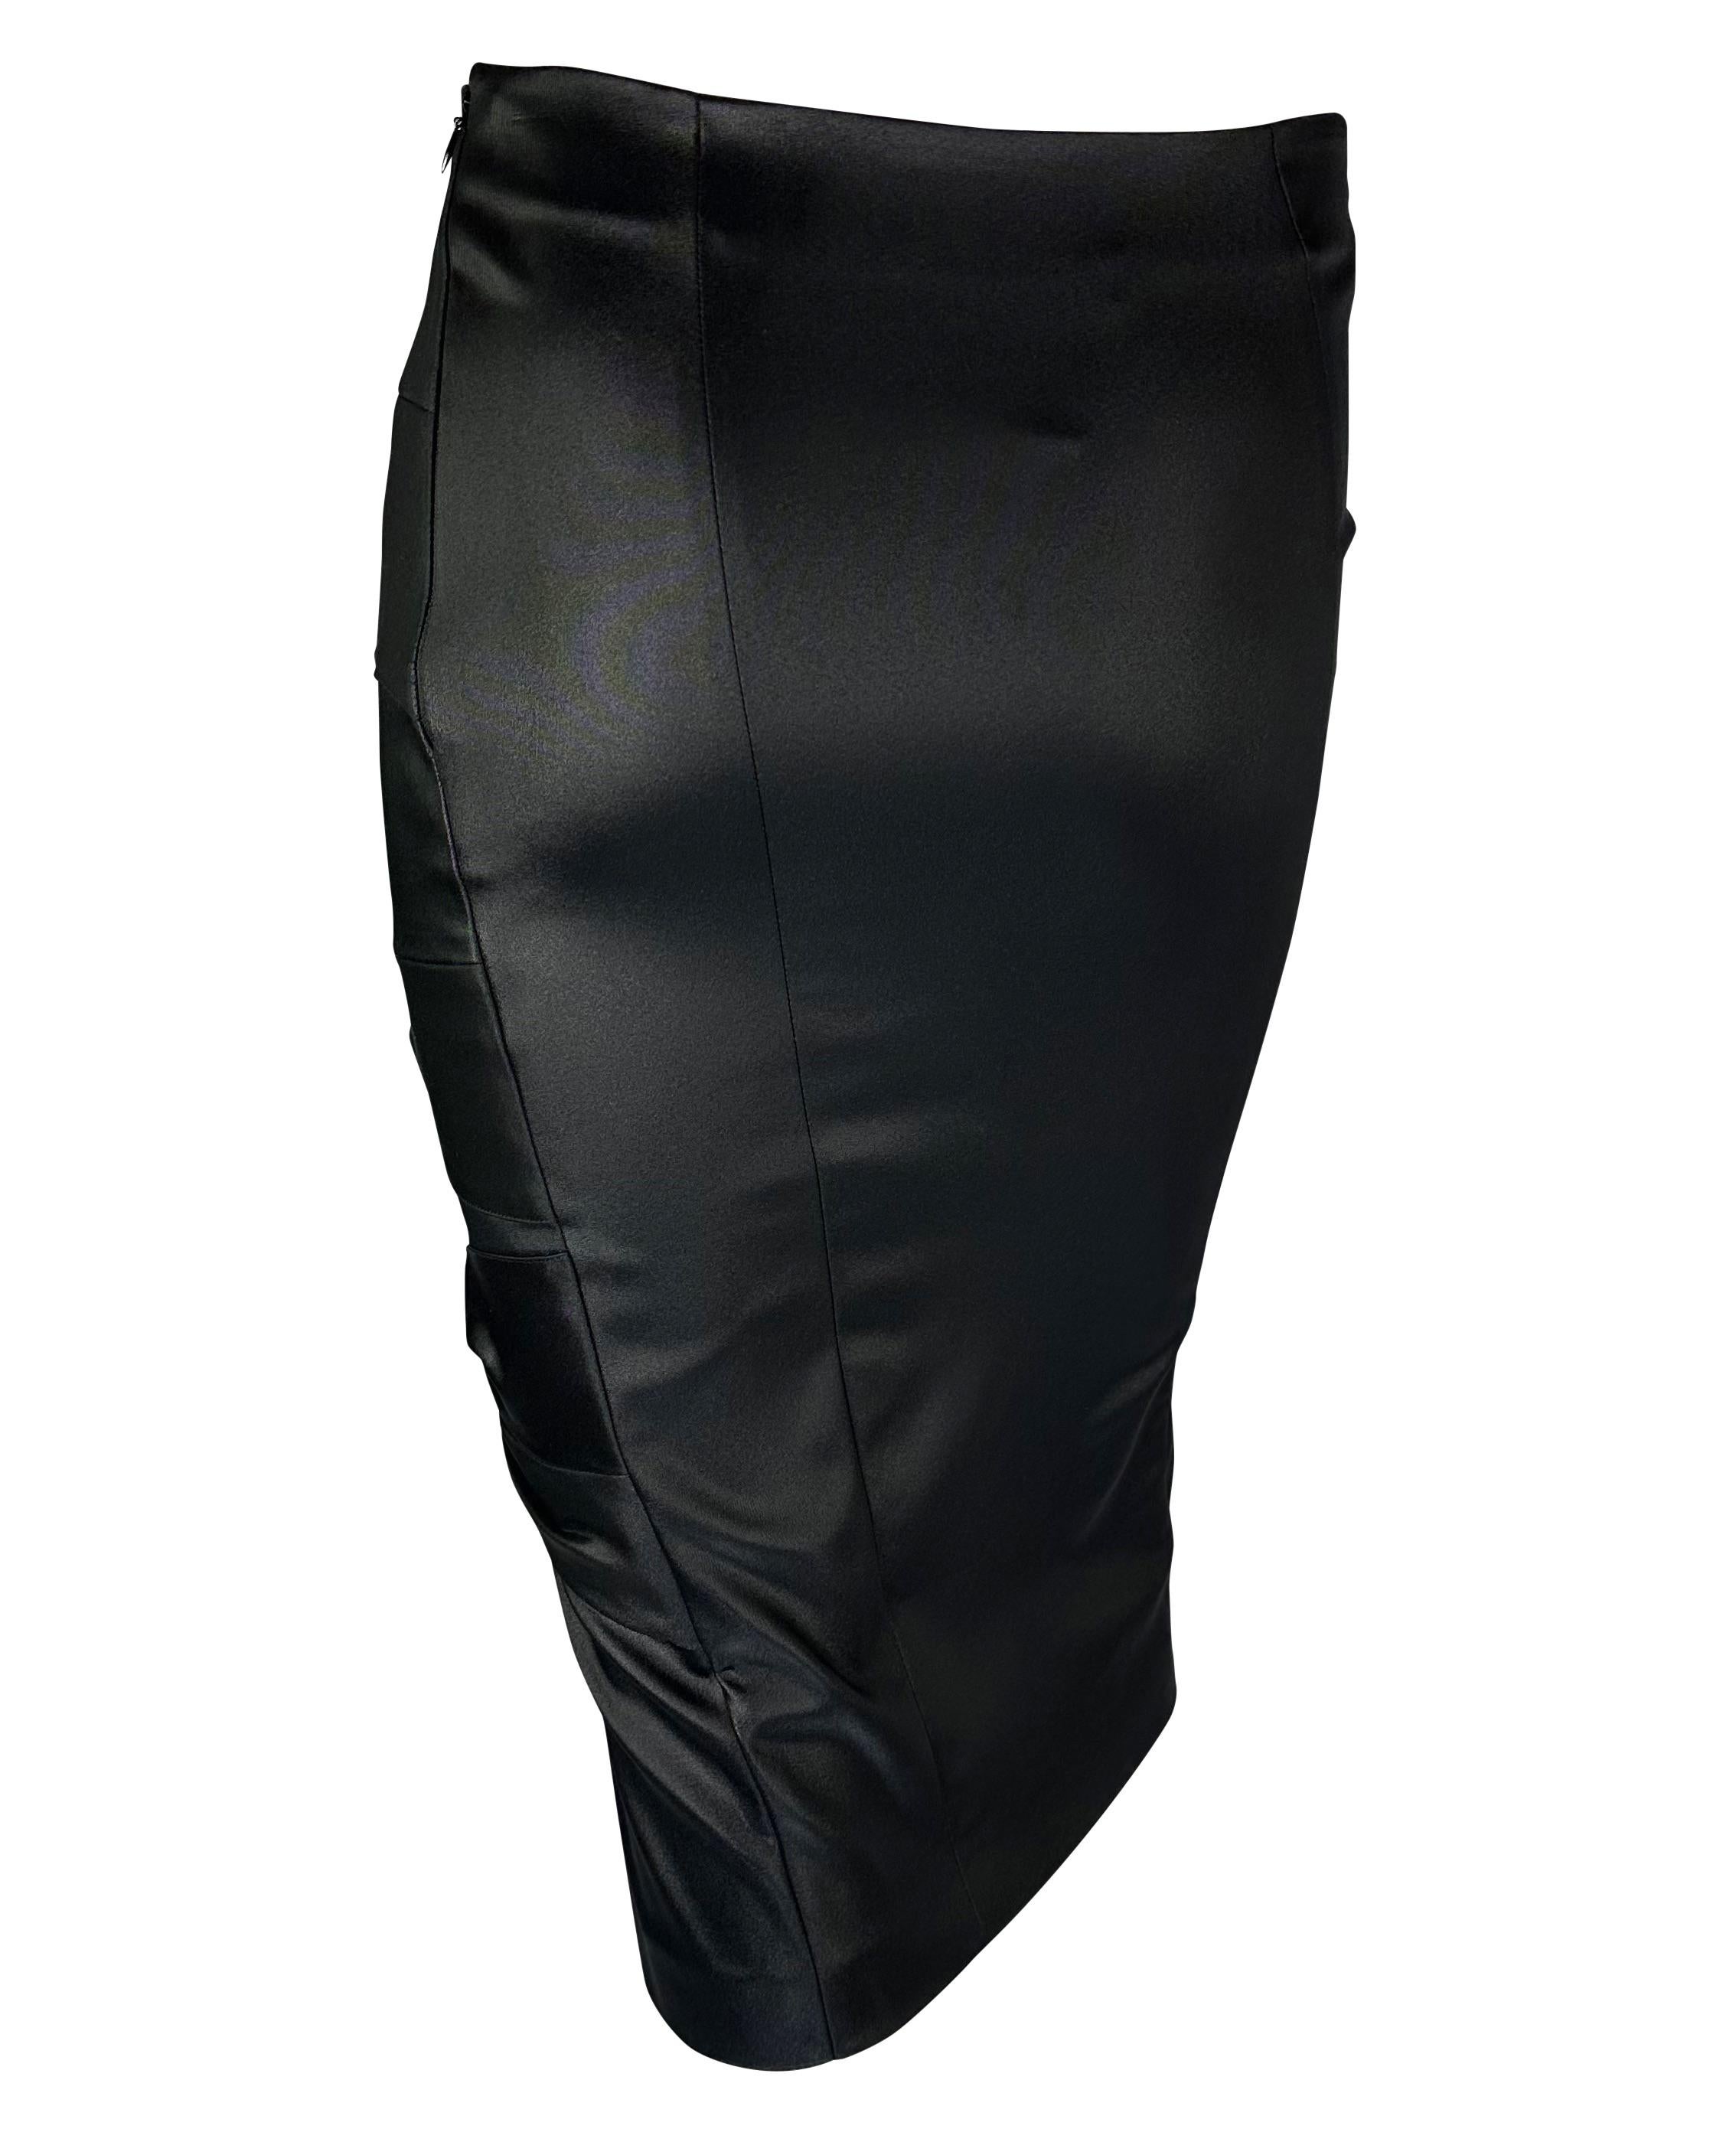 F/W 2003 Christian Dior by John Galliano for Tie Accenture Bodycon Stretch Skirt (jupe extensible avec nœud de cravate) en vente 1